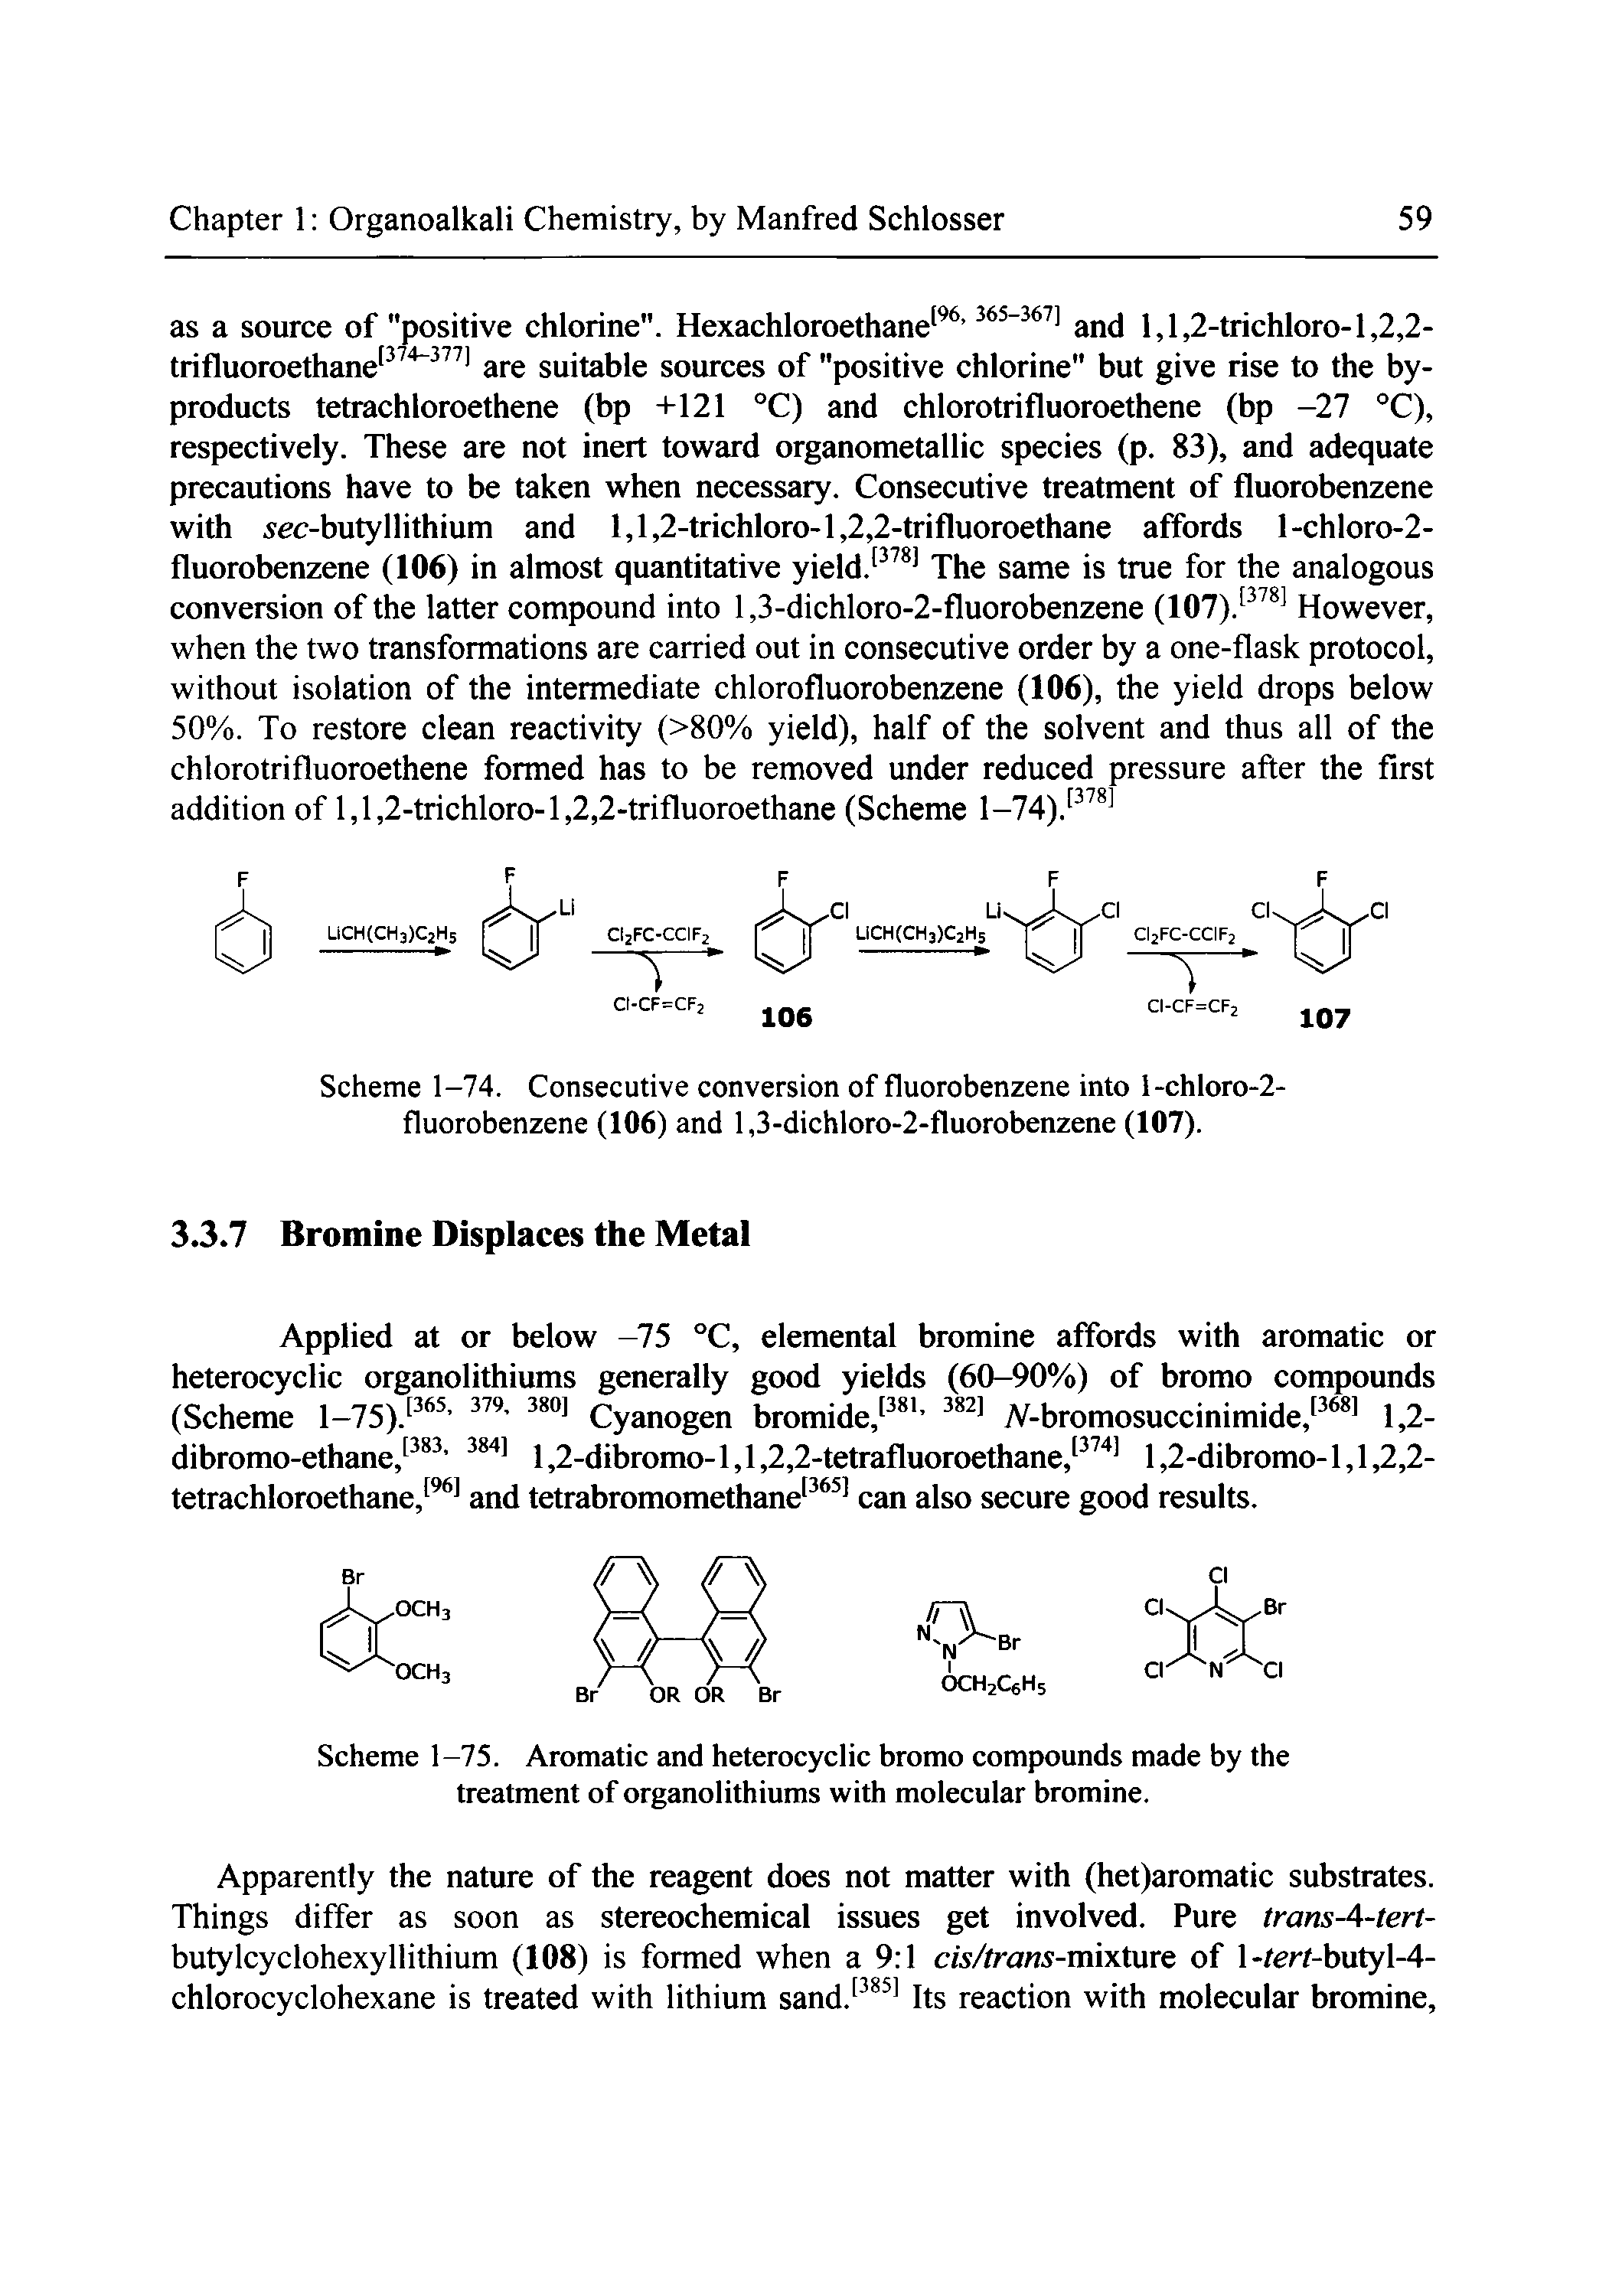 Scheme 1-74. Consecutive conversion of fluorobenzene into l-chloro-2-fluorobenzene (106) and l,3-dichloro-2-fluorobenzene (107).